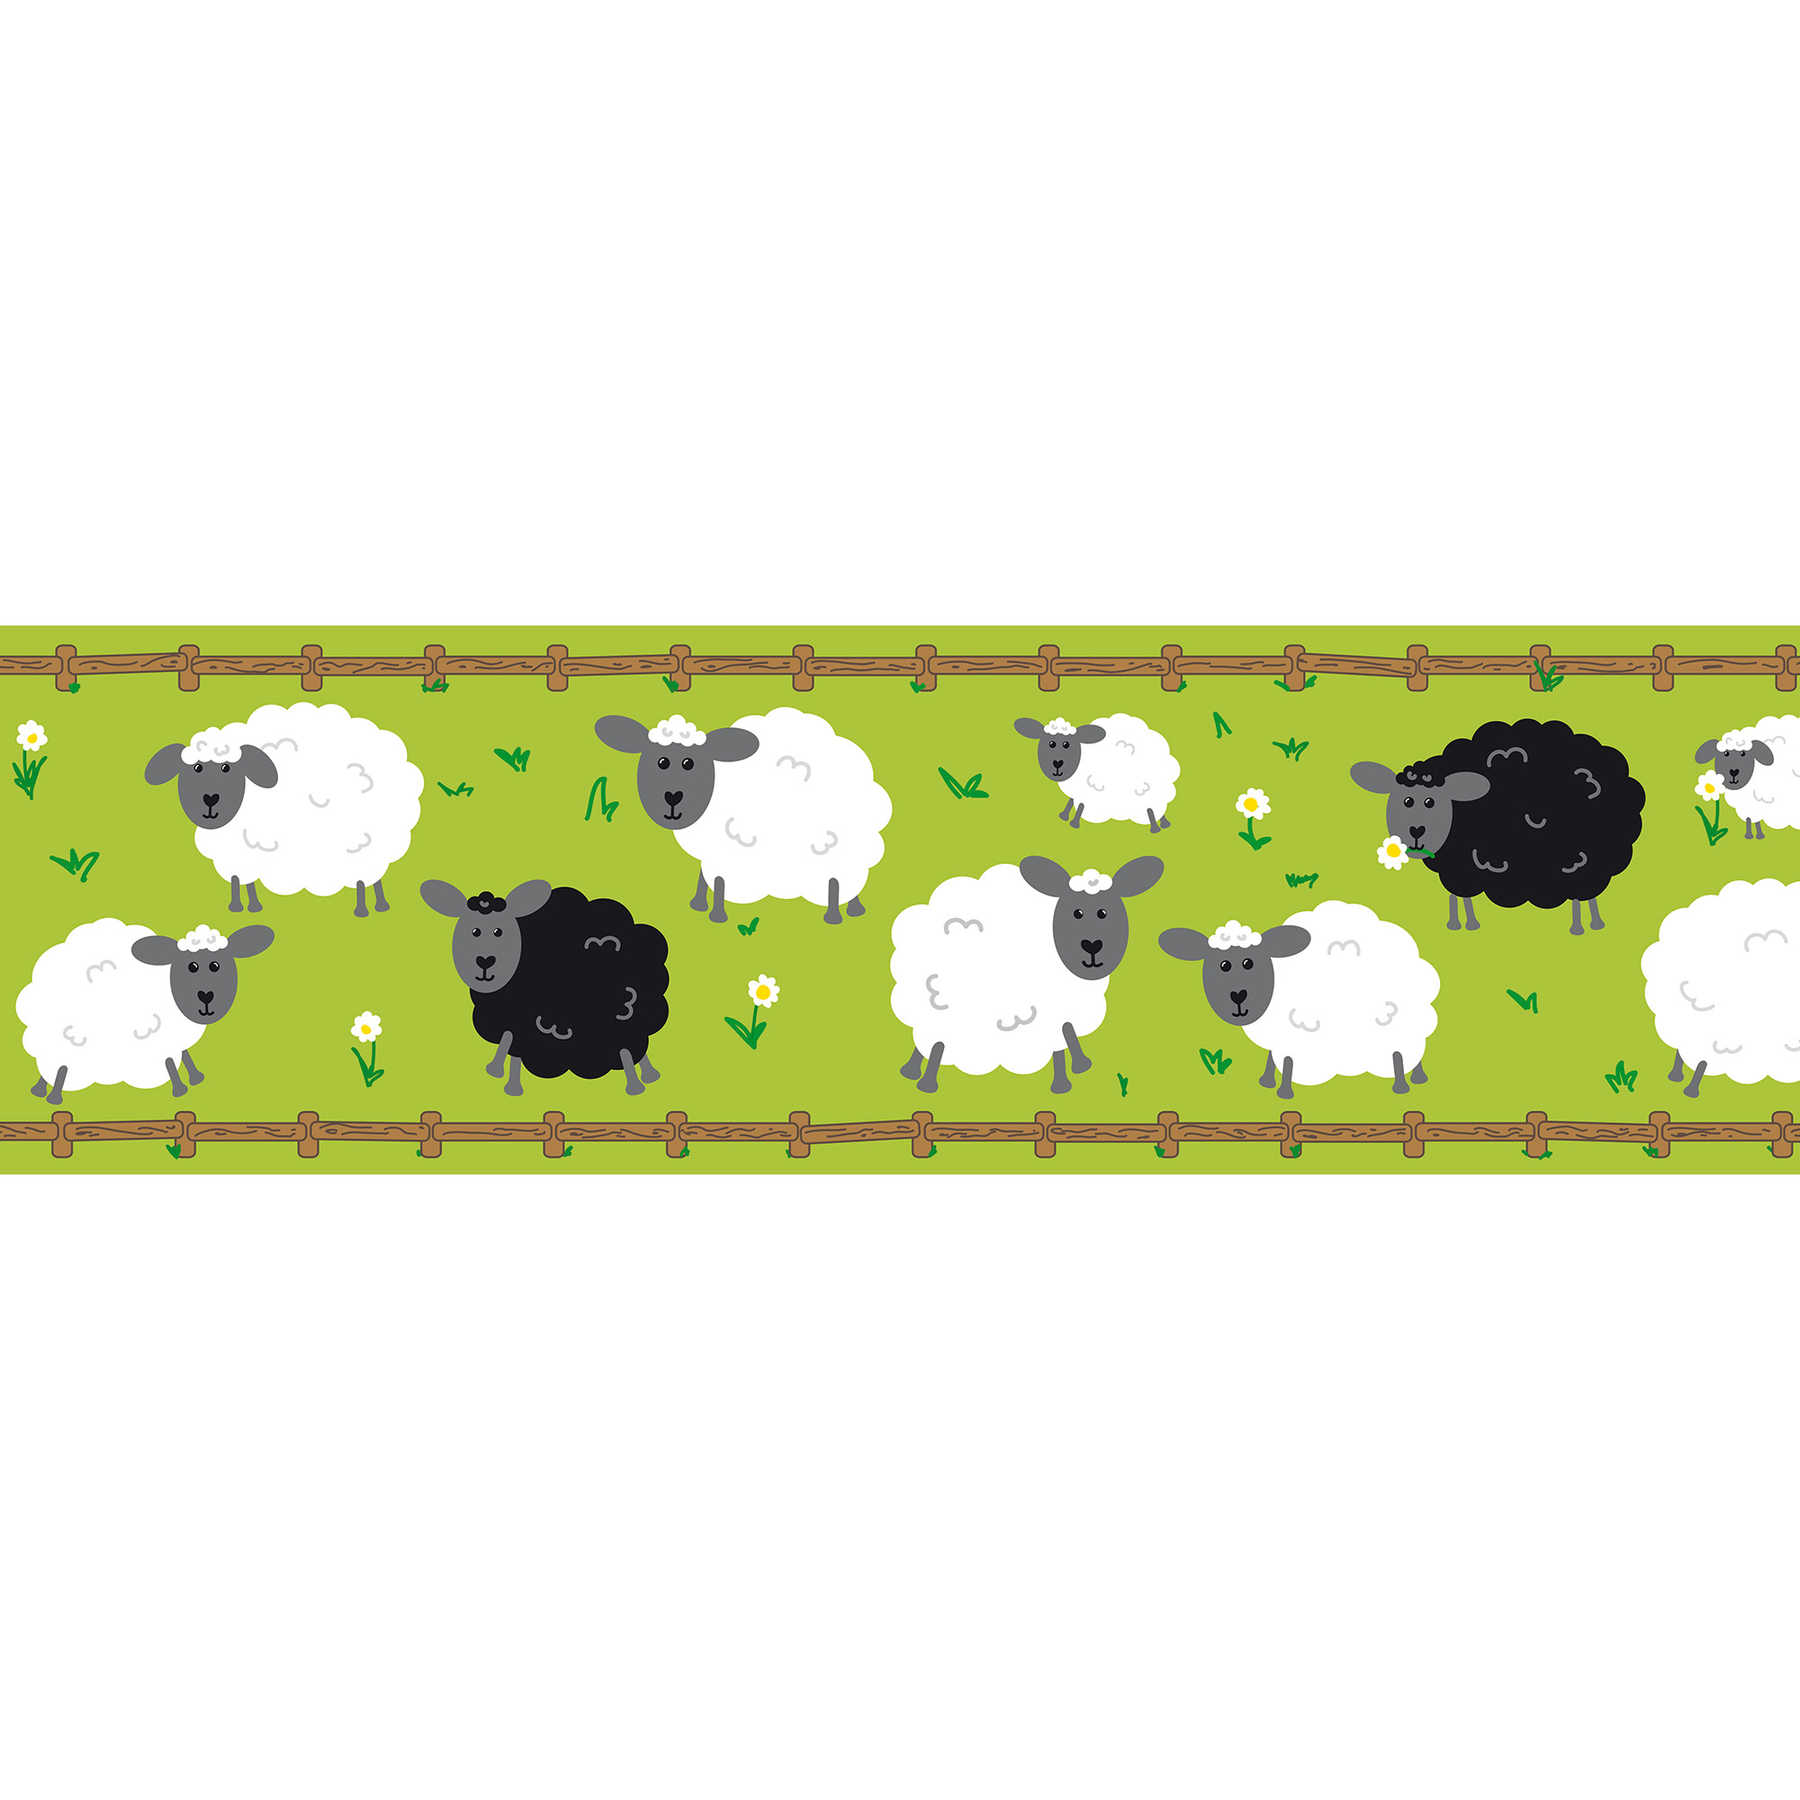 Self-adhesive border "Sheep in the pasture" - Green, White, Black
